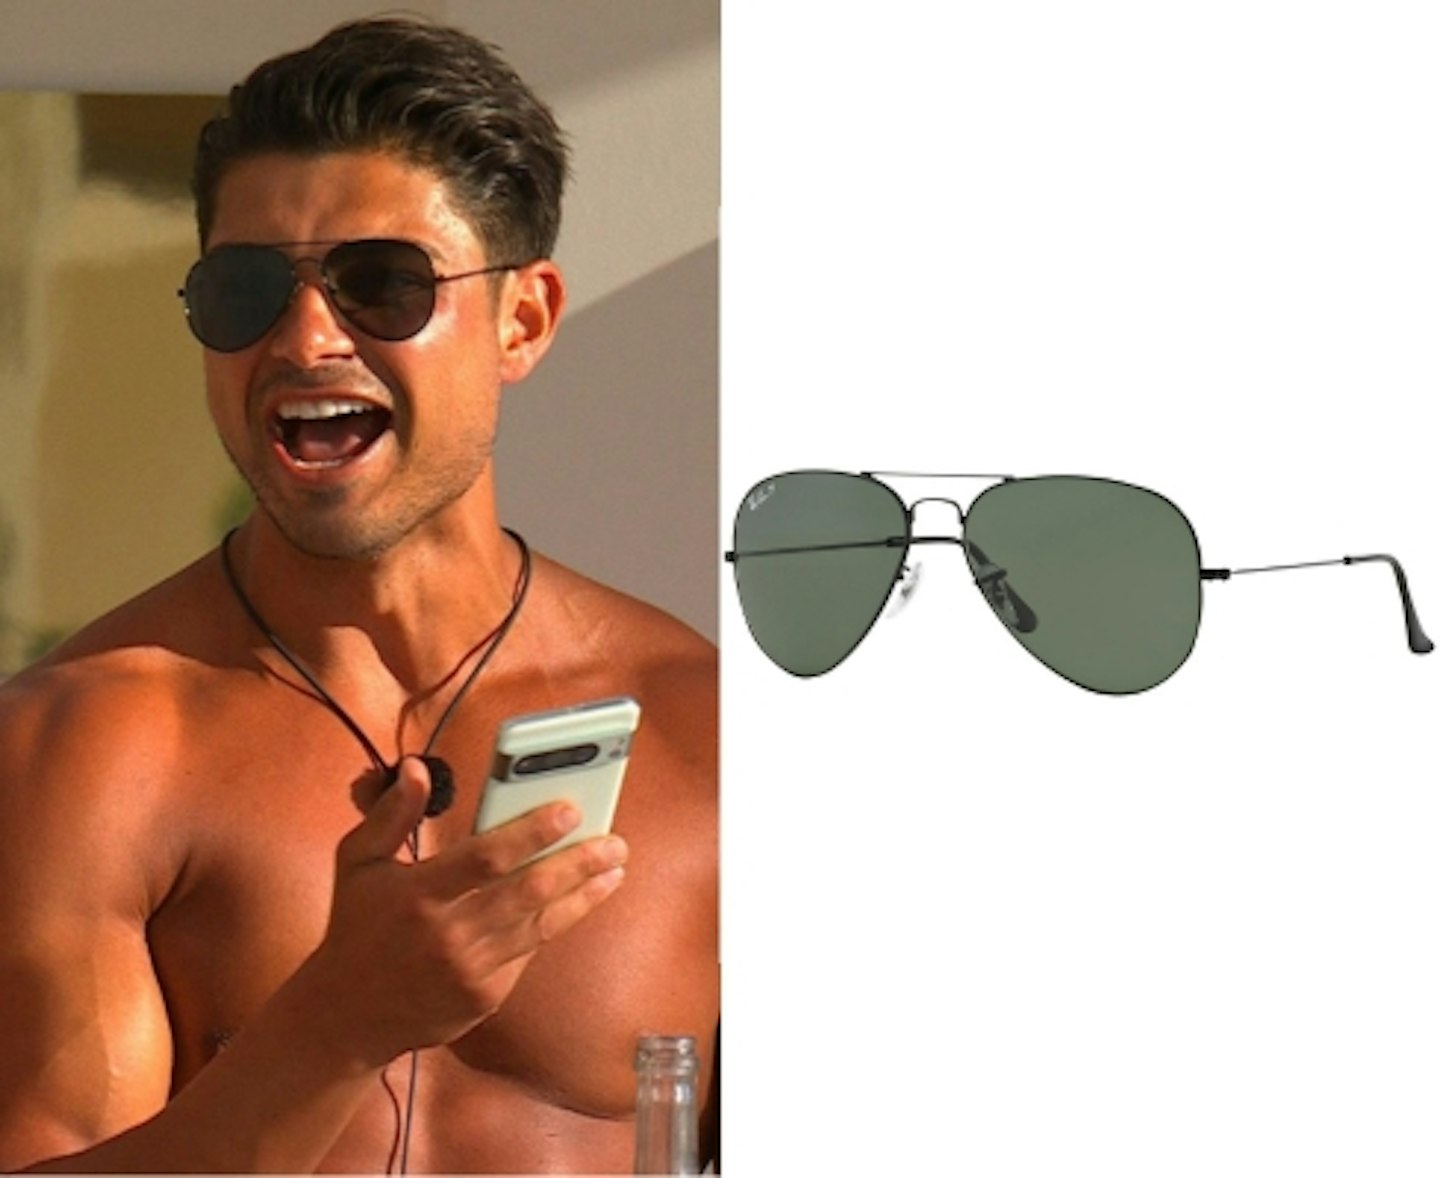 Anton Danyluk's Black Ray-Ban Sunglasses